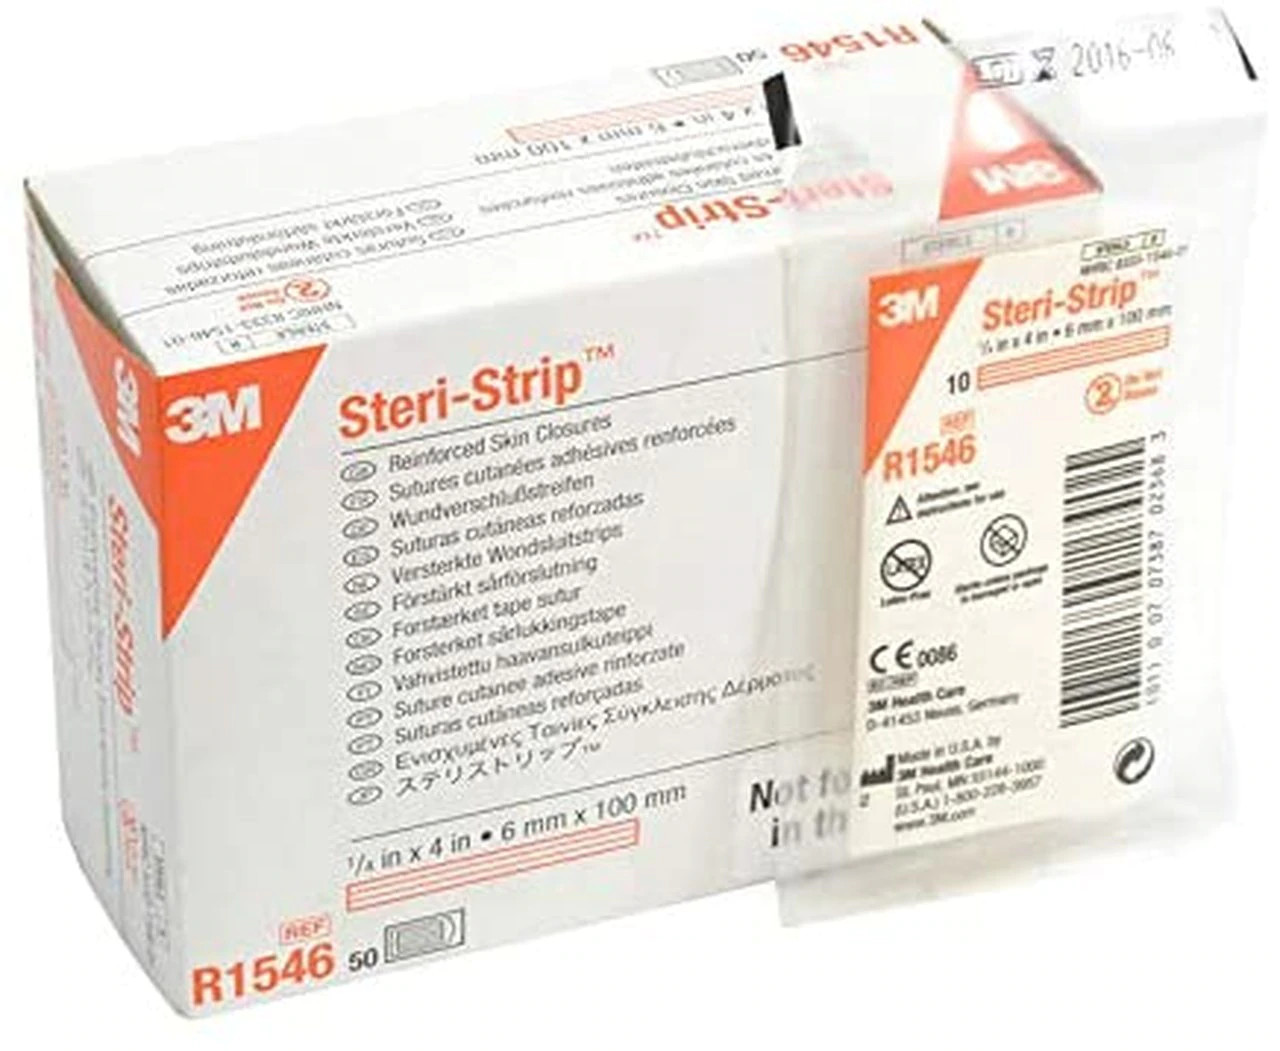 1 inch x 5 inch 3M Steri-Strip Adhesive Skin Closures, 4 ENV - R1548